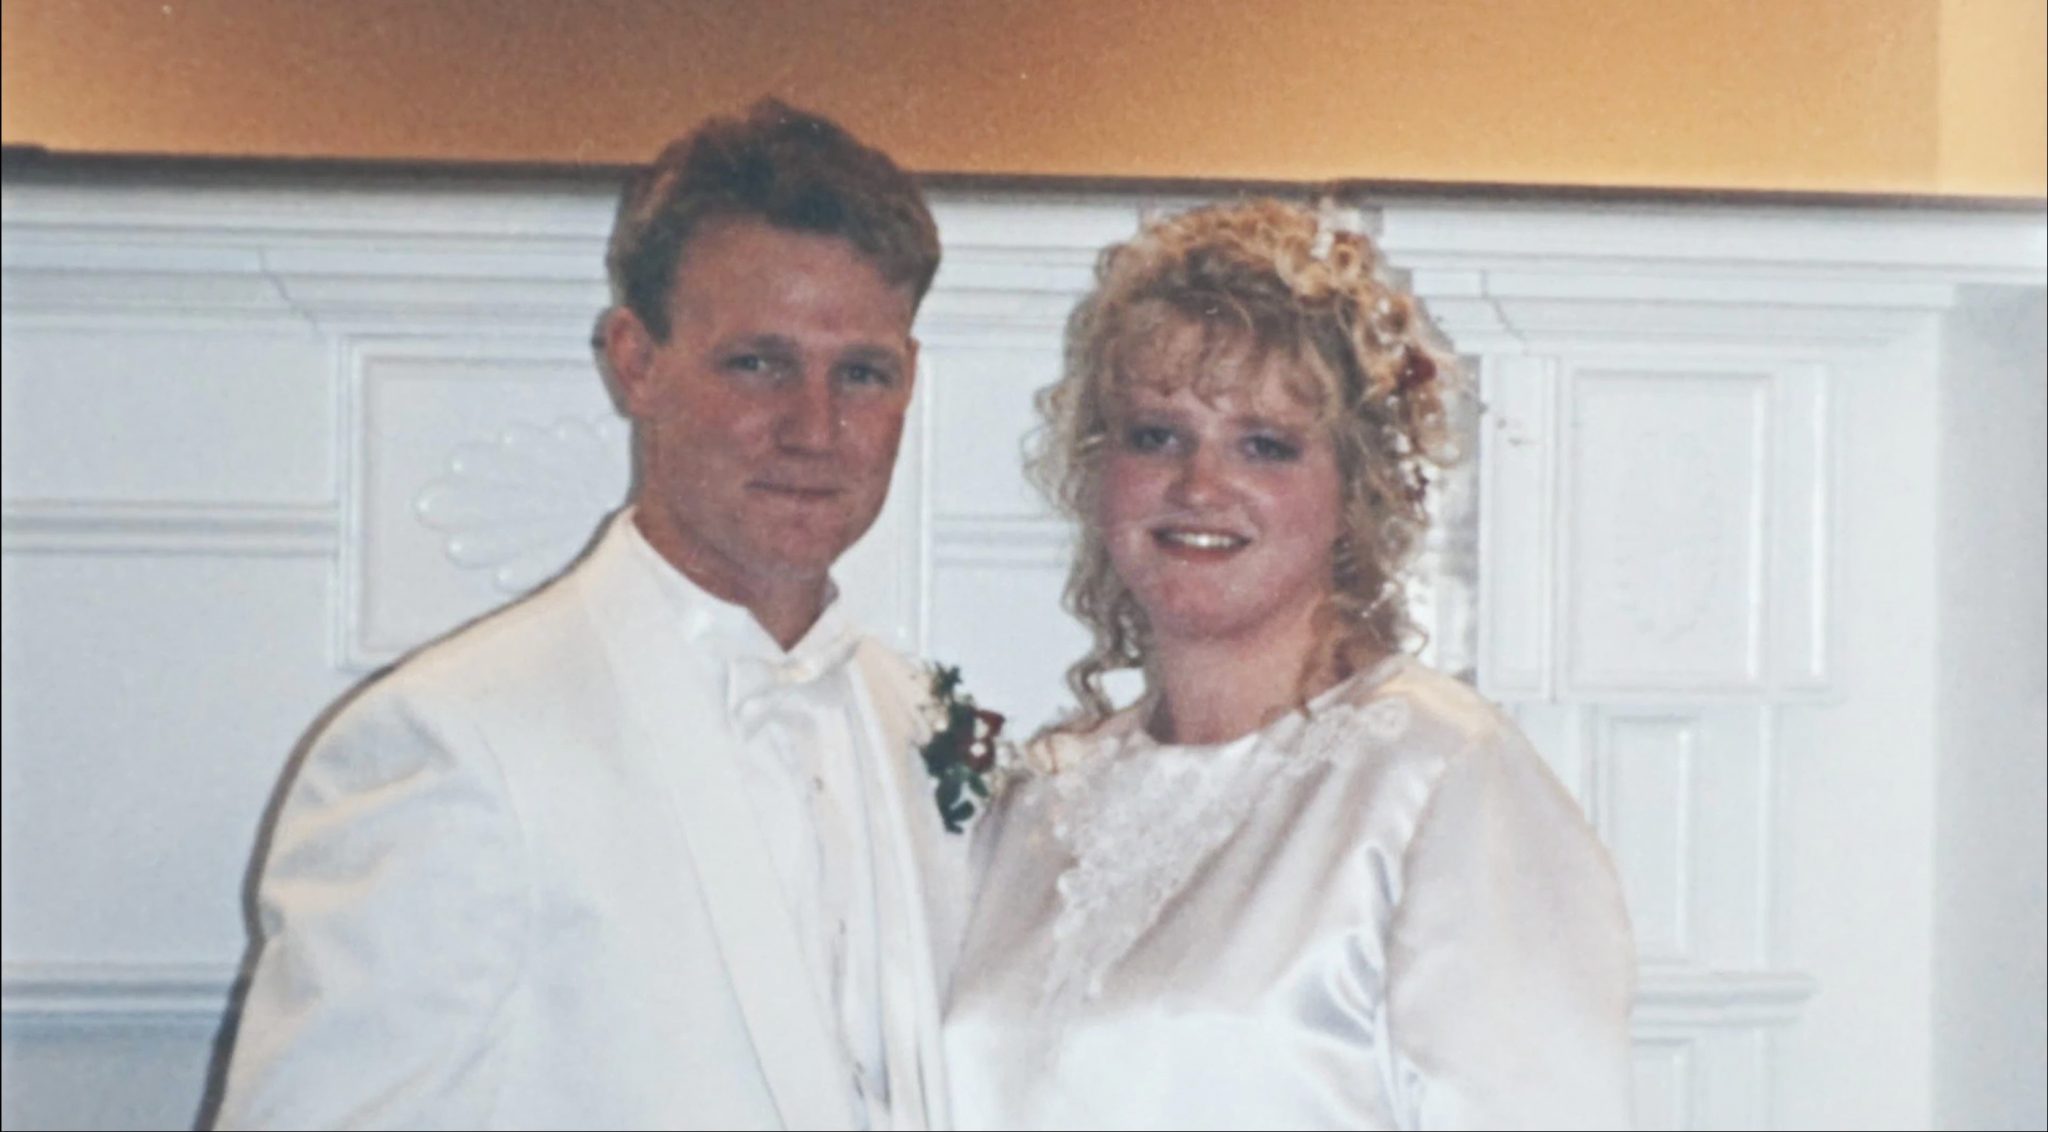 Kody Brown and Christine Brown on their wedding day. 